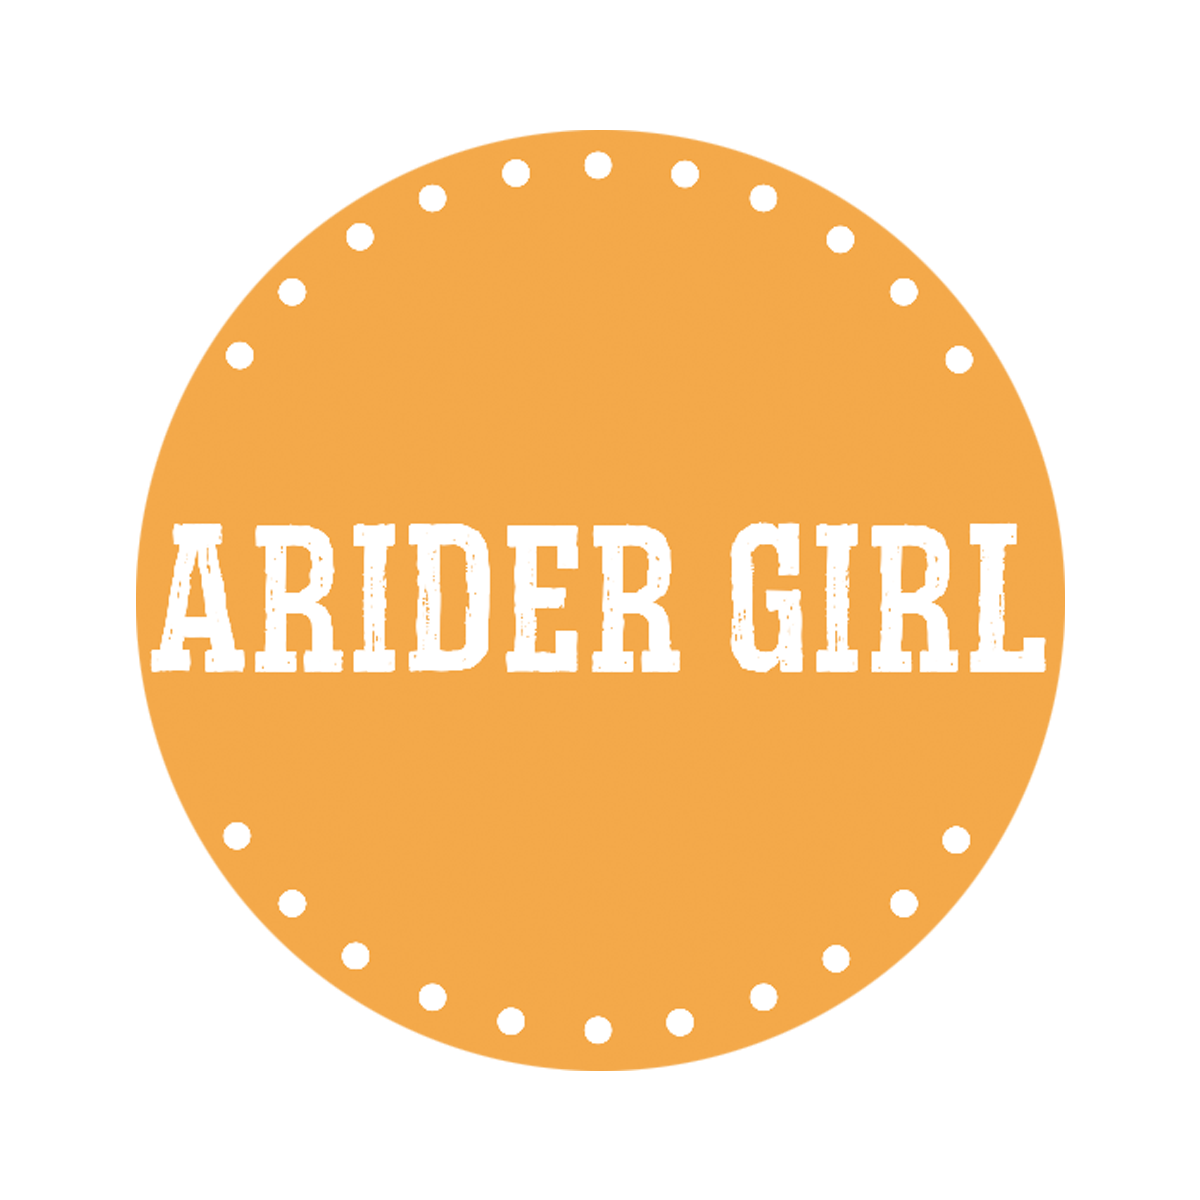 arider girl shoes wholesale